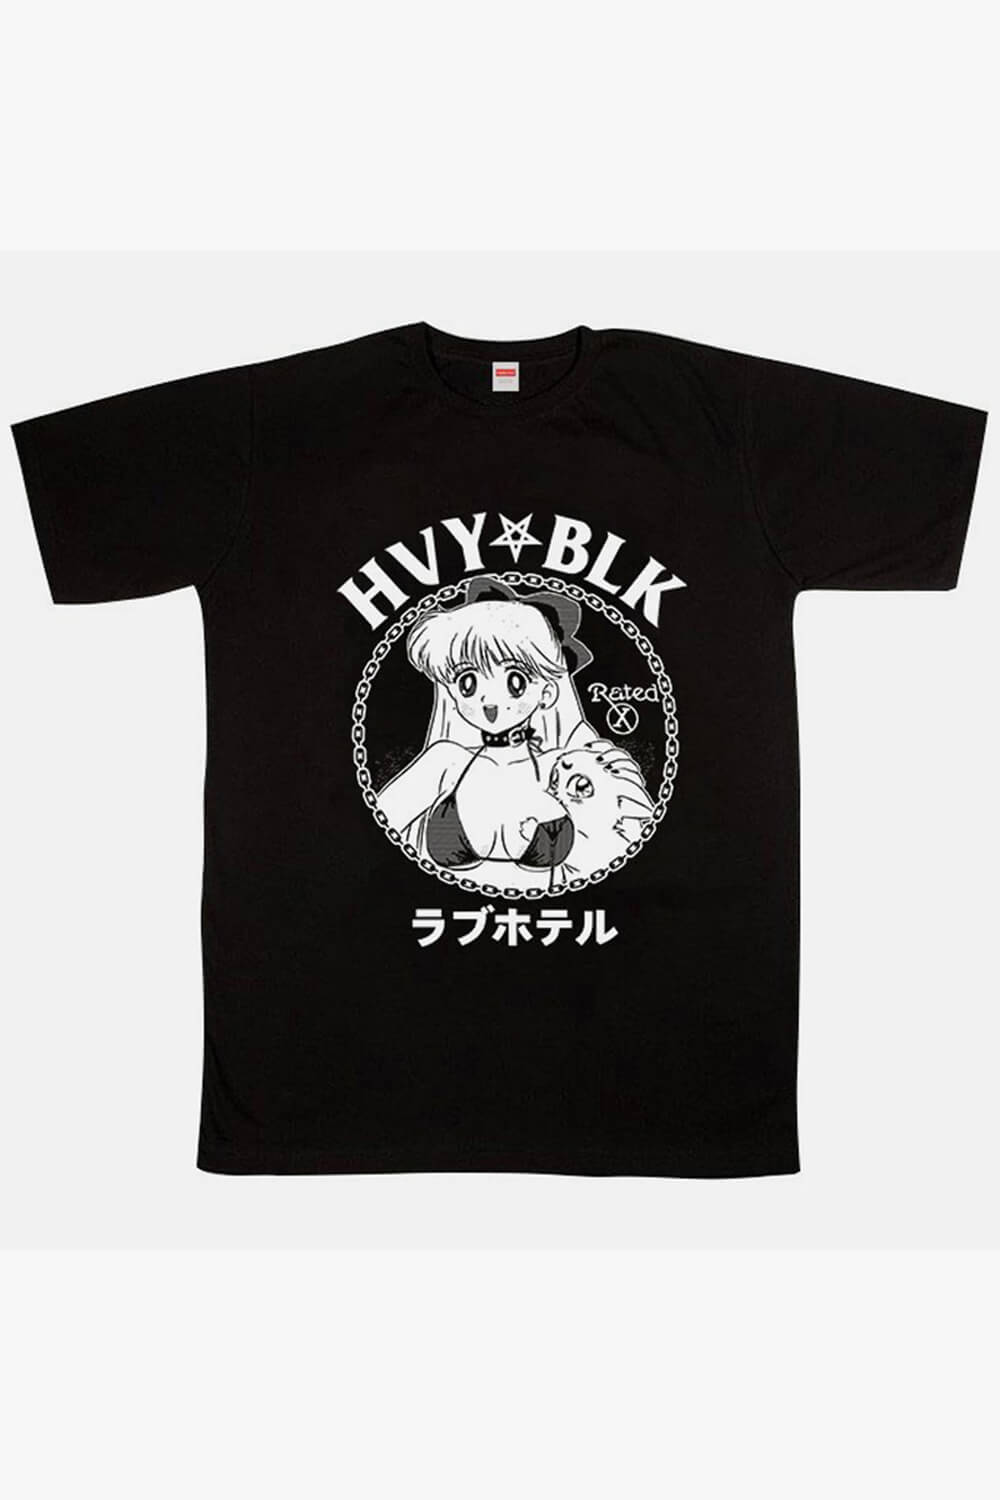 2K Animecore Girl HVY BLK Dark Fashion T-Shirt E-Kids